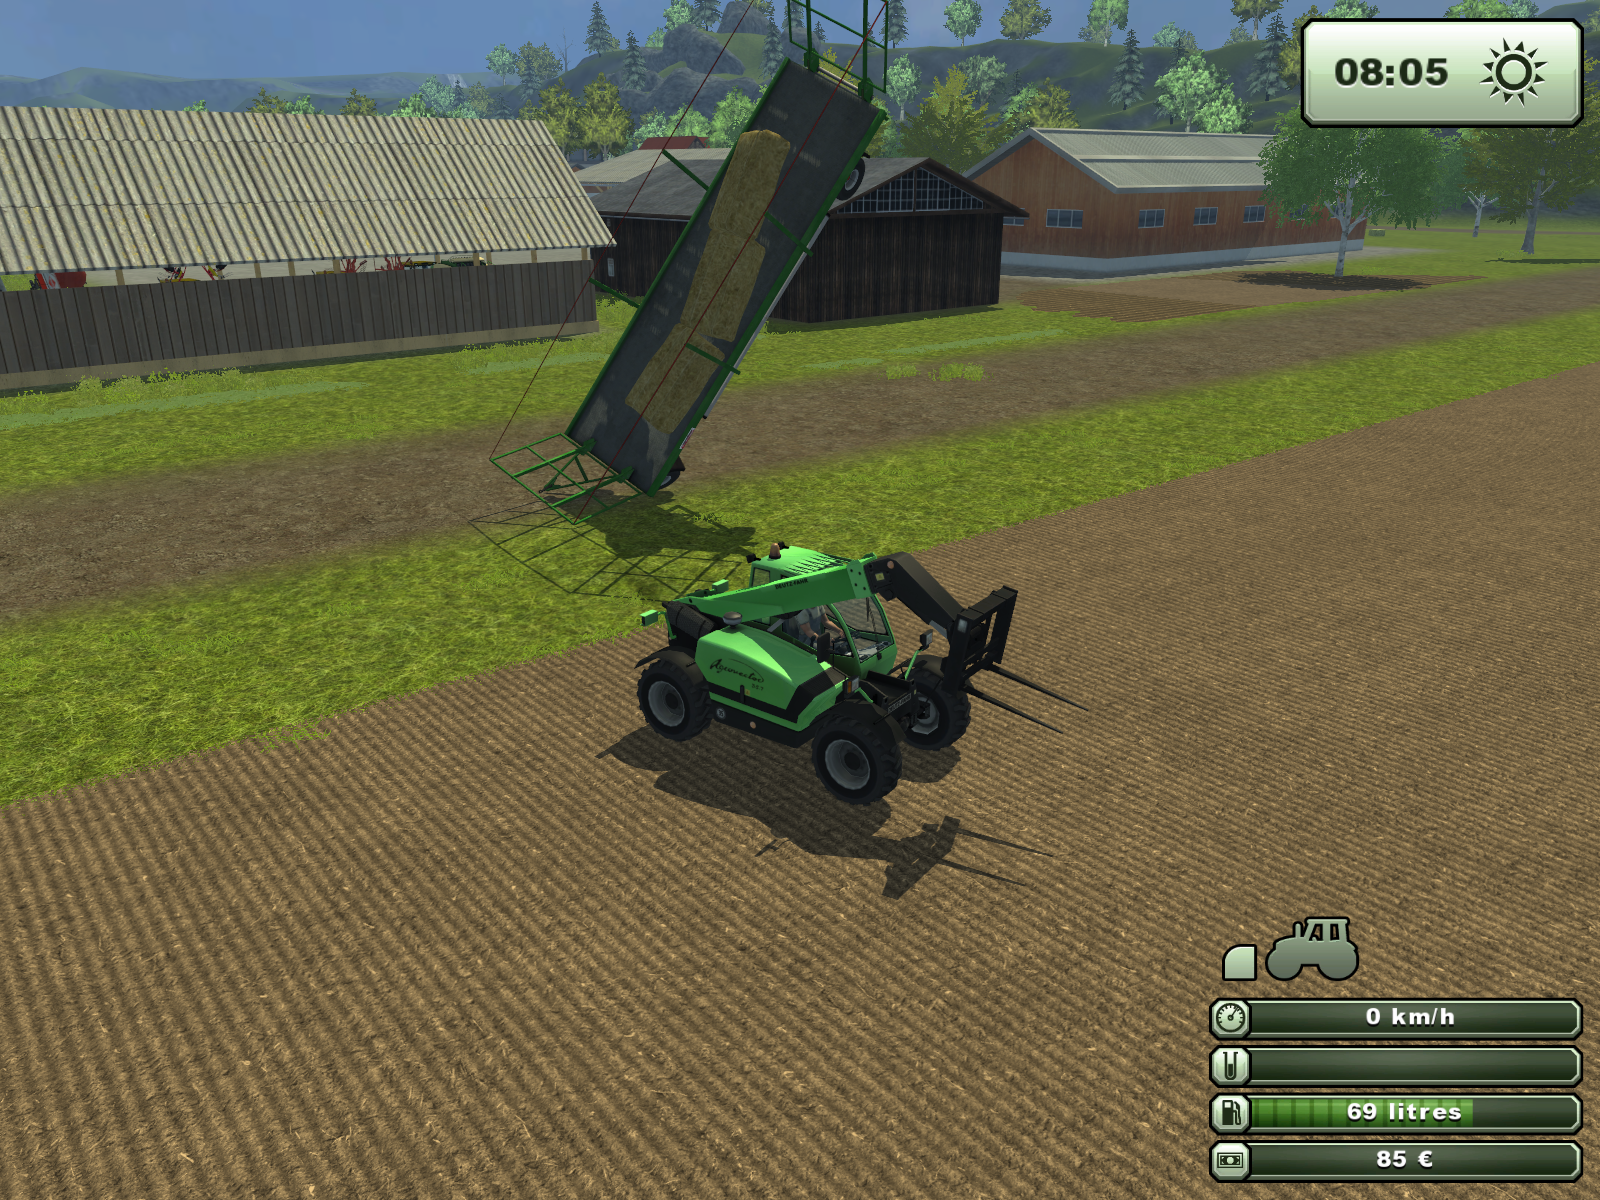 Animal Shed Mod of Fs 23, Farming Simulator 23 Mods